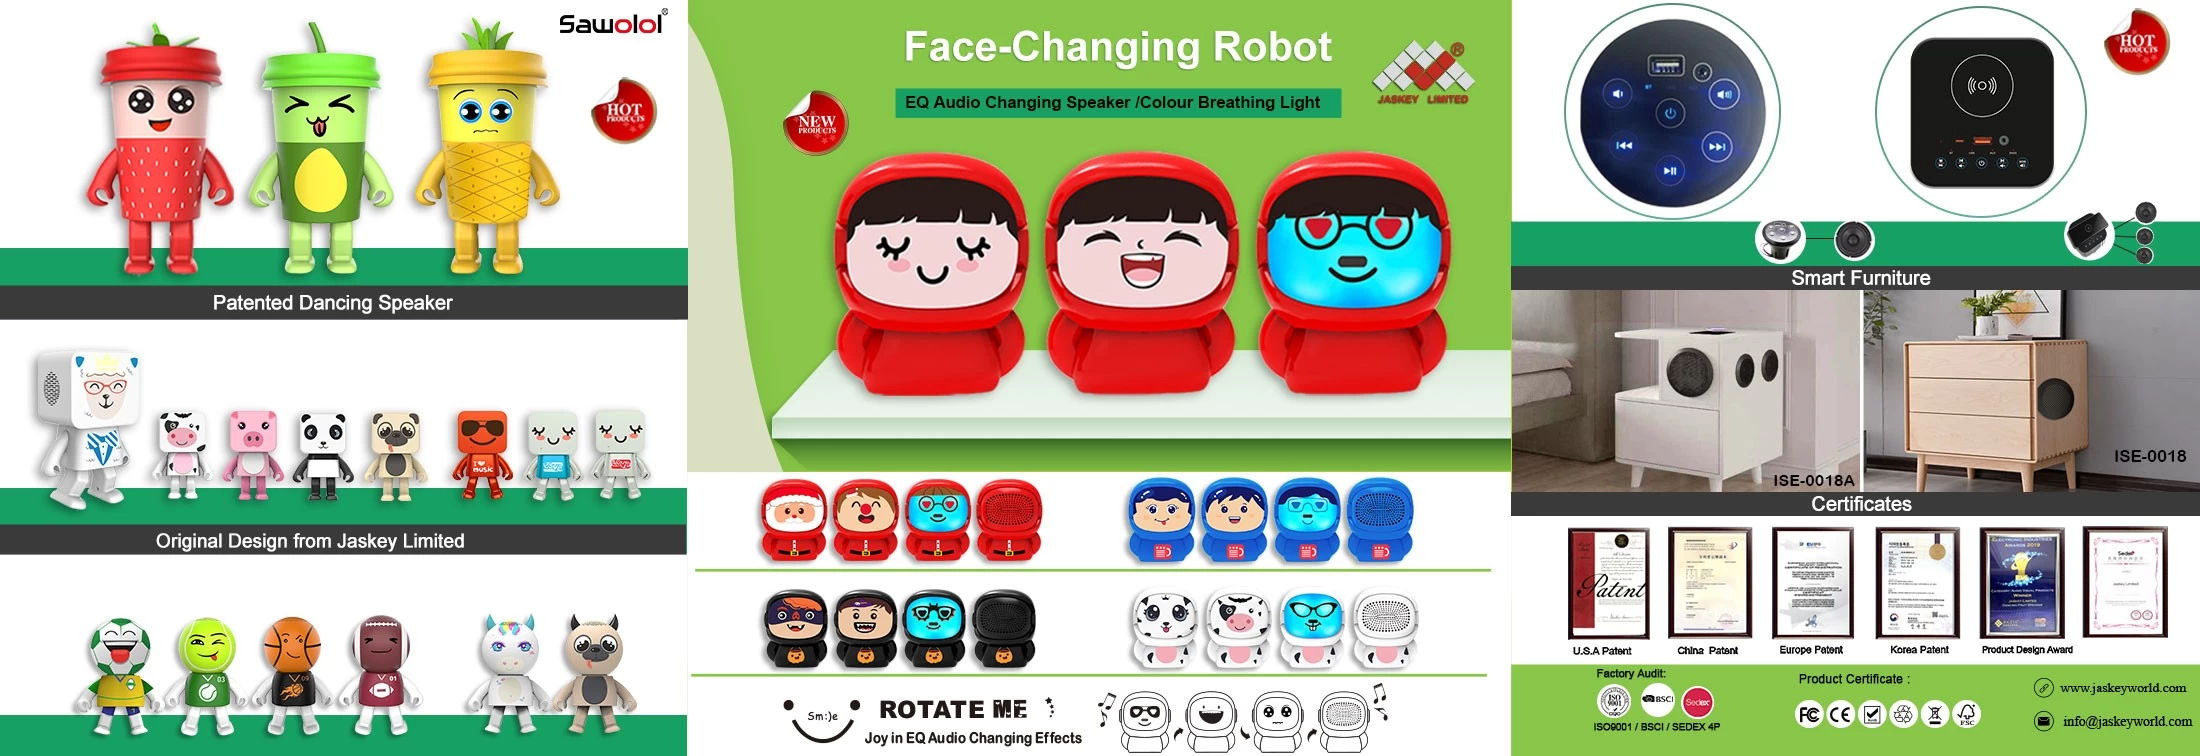 Face-changing Robot